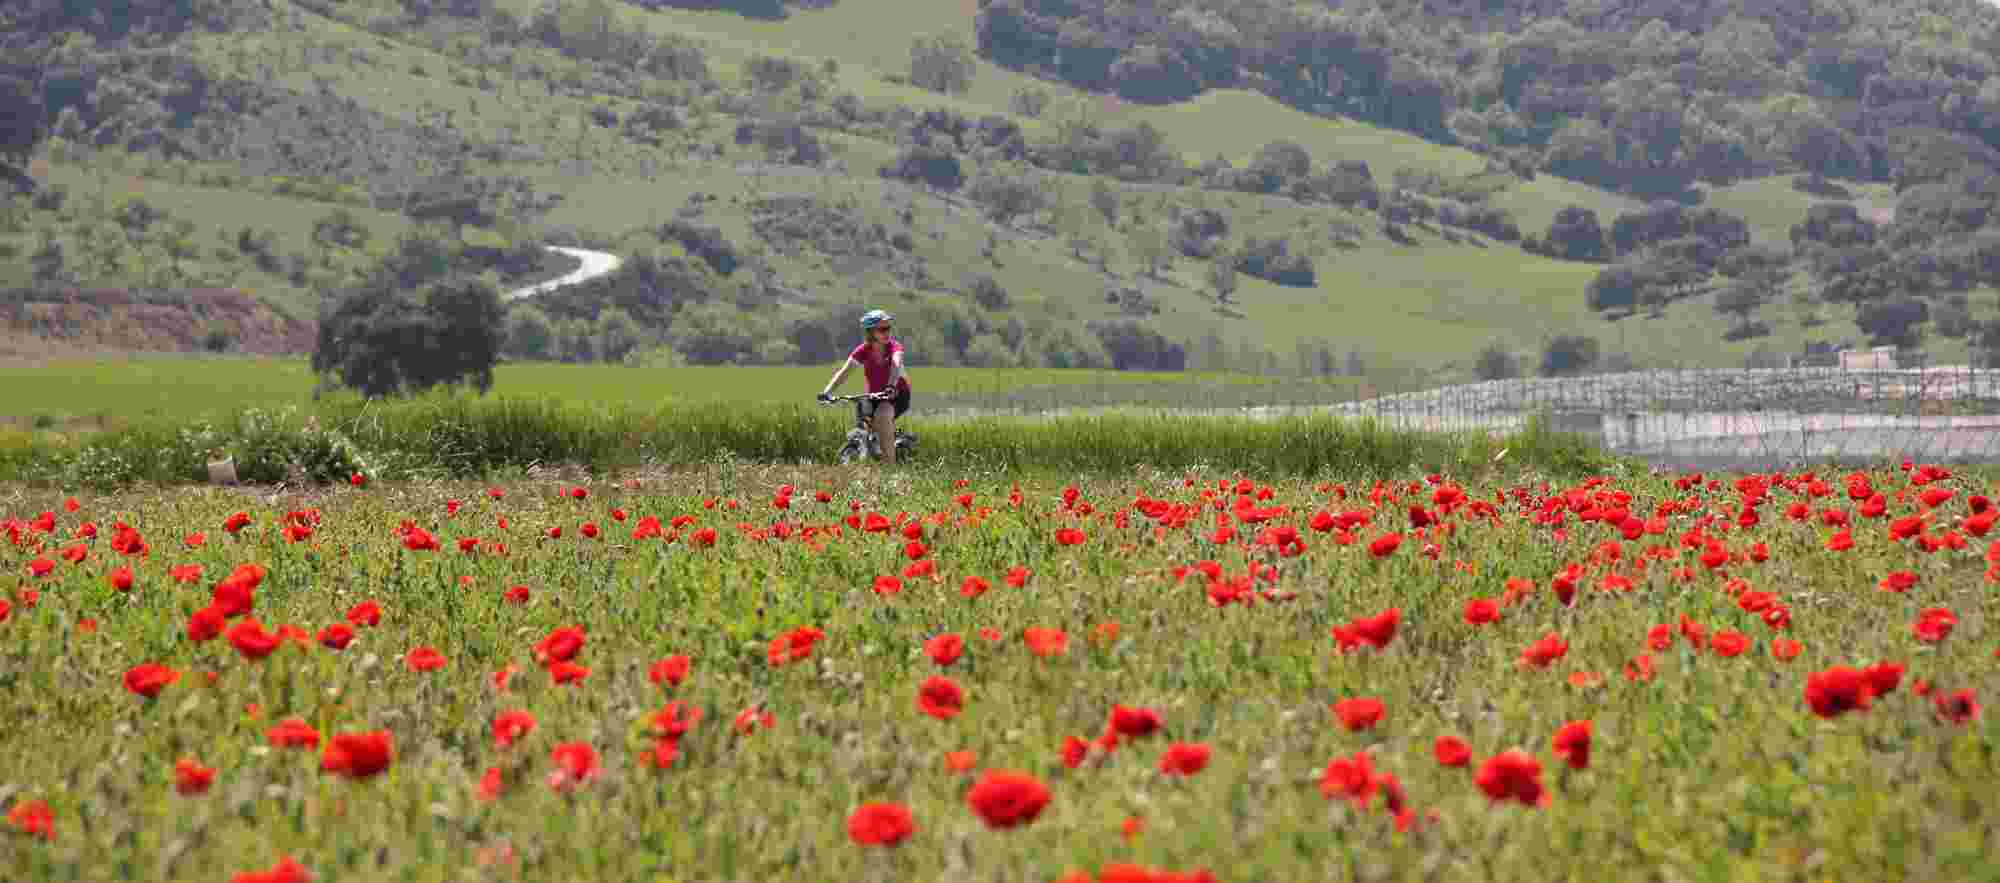 Cyclist amongs field of poppies